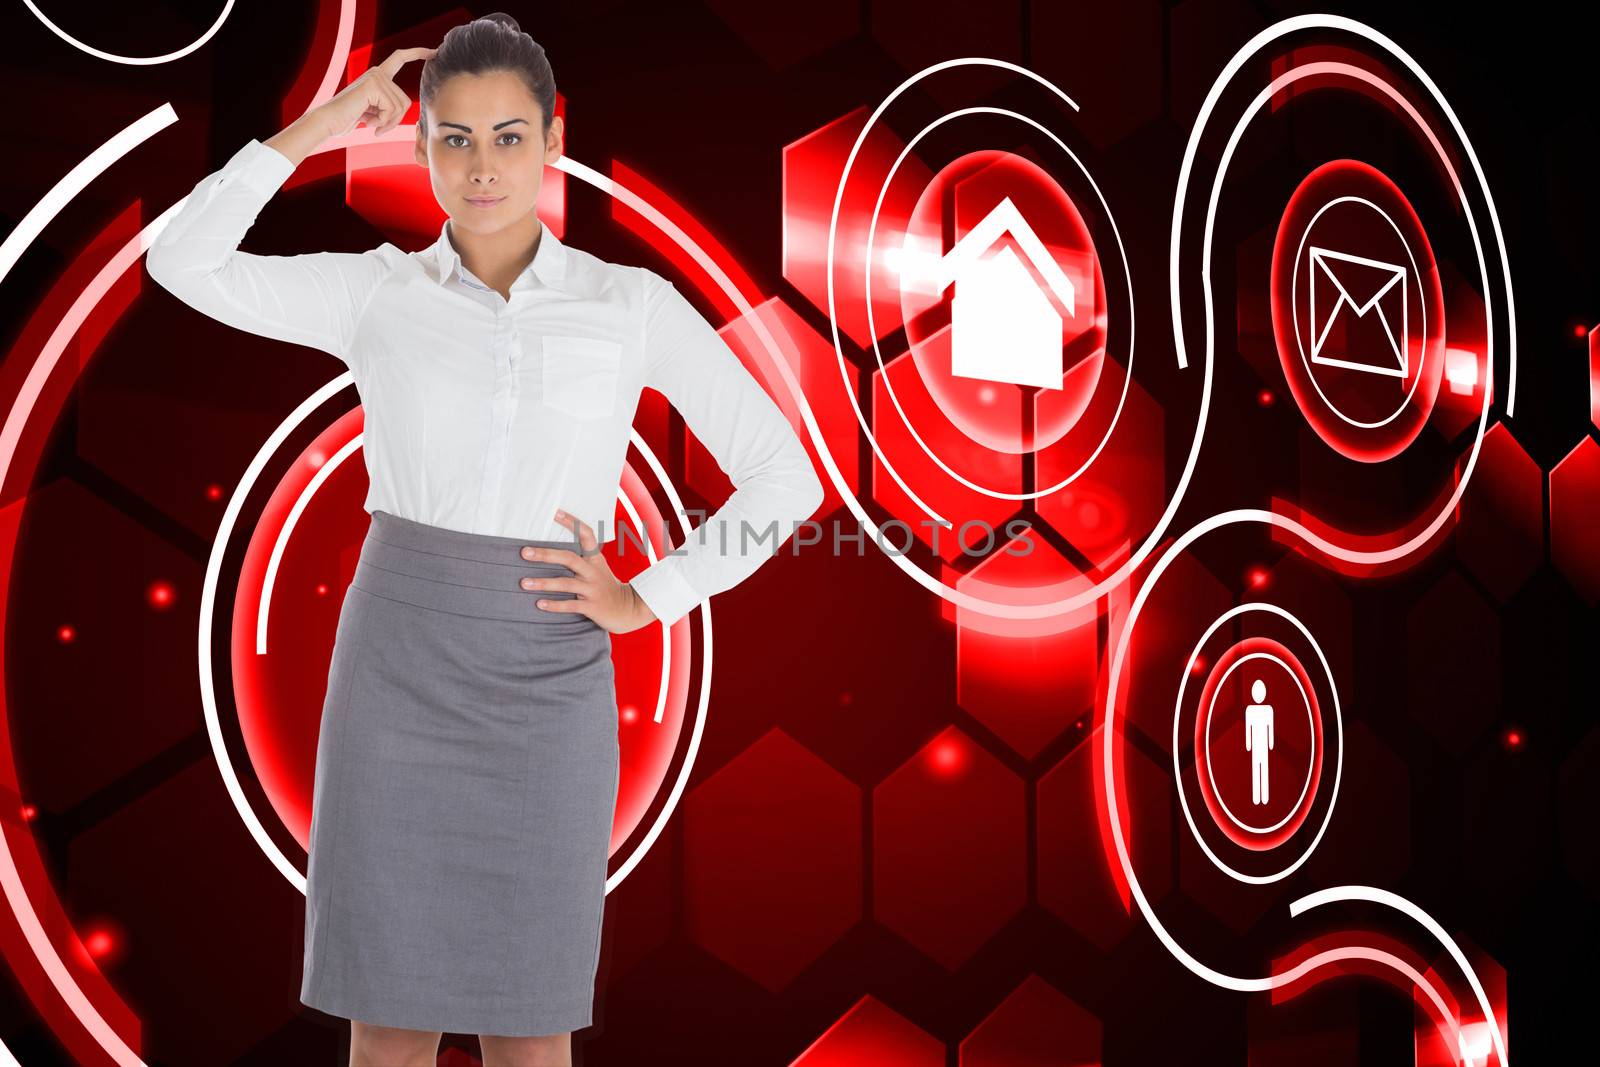 Composite image of focused businesswoman by Wavebreakmedia